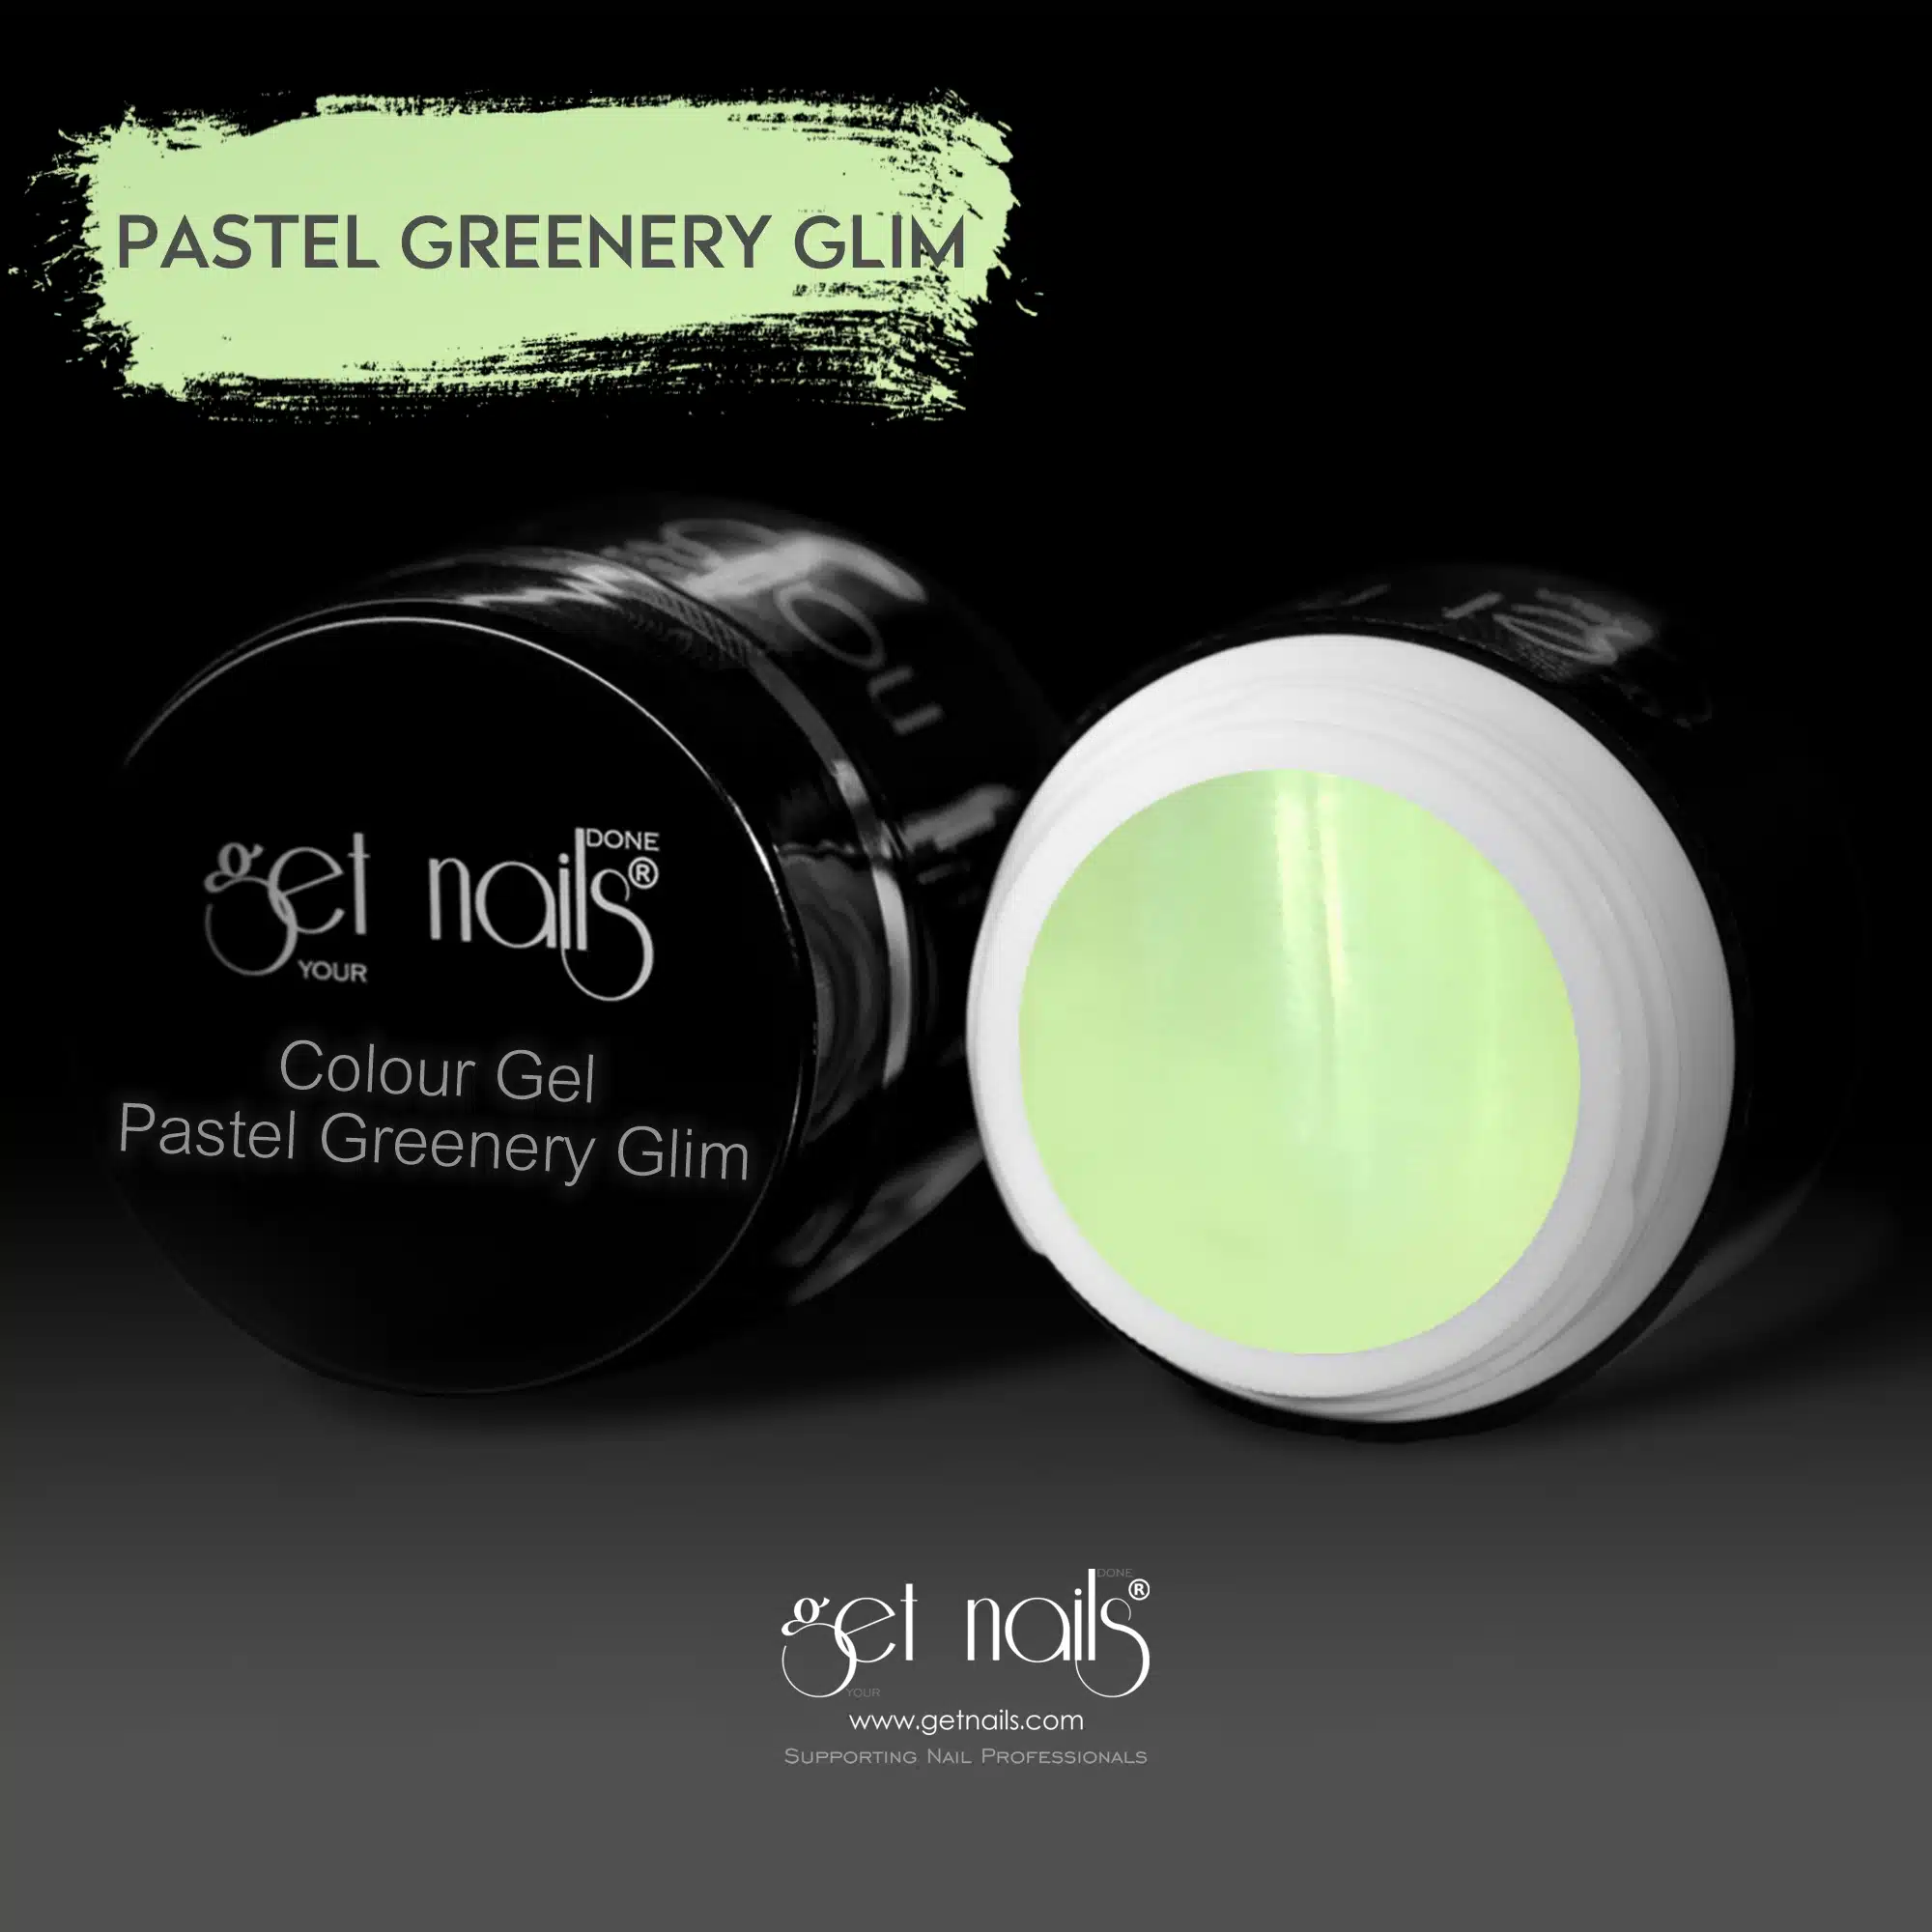 Get Nails Austria - Color Gel Pastel Greenery Glim 5g